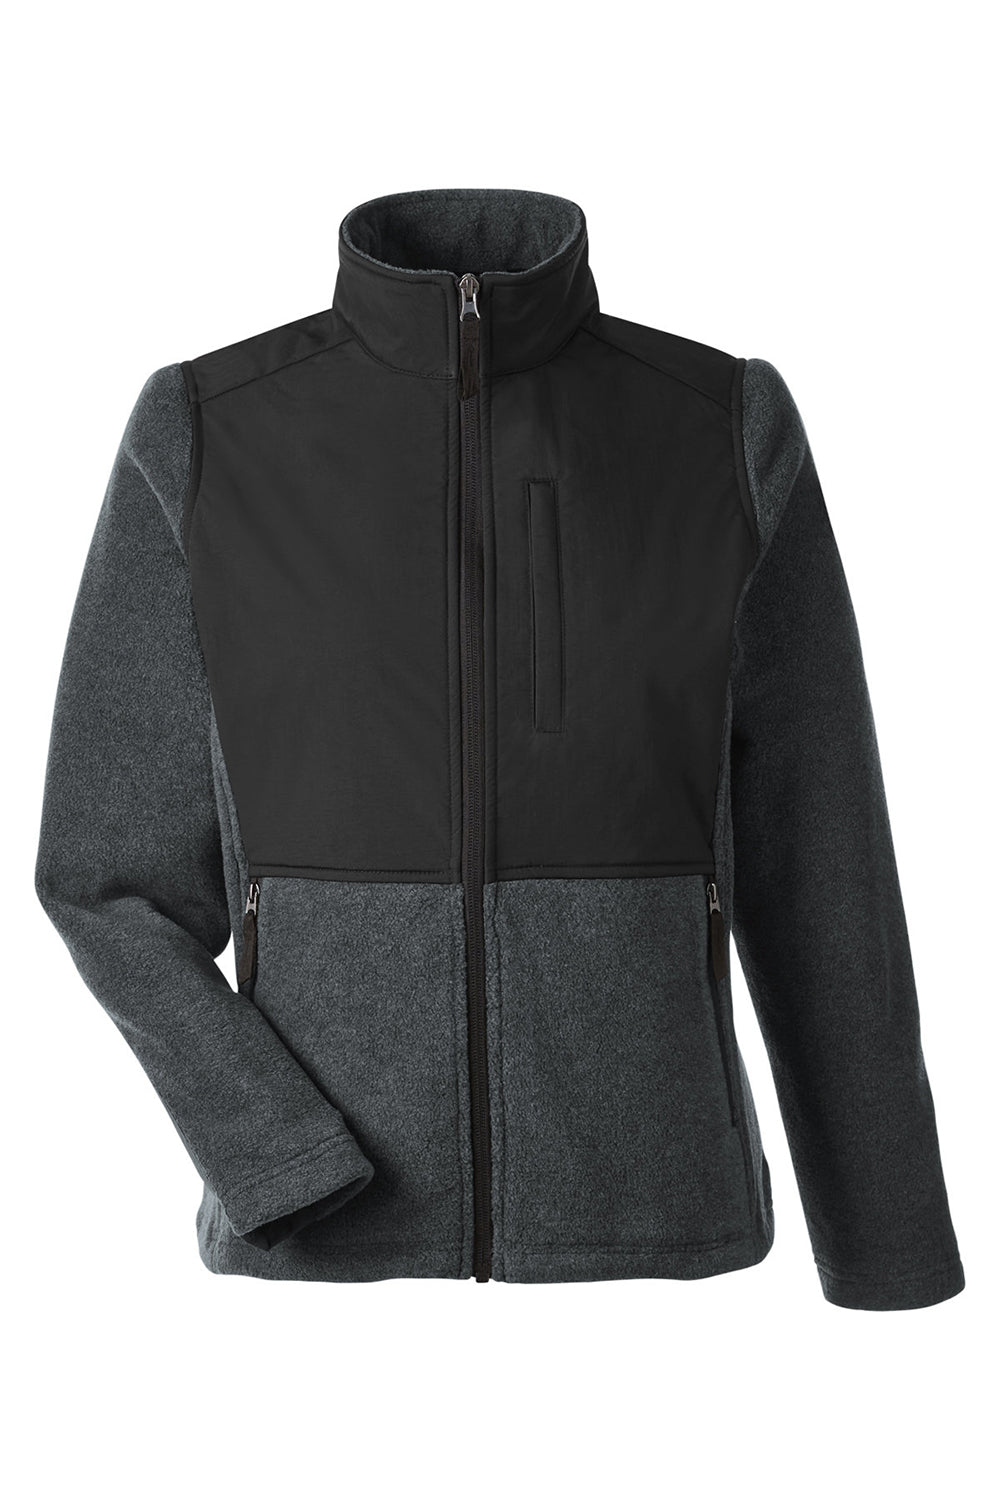 Core 365 CE890W Womens Journey Summit Hybrid Full Zip Jacket Heather Charcoal Grey/Black Flat Front